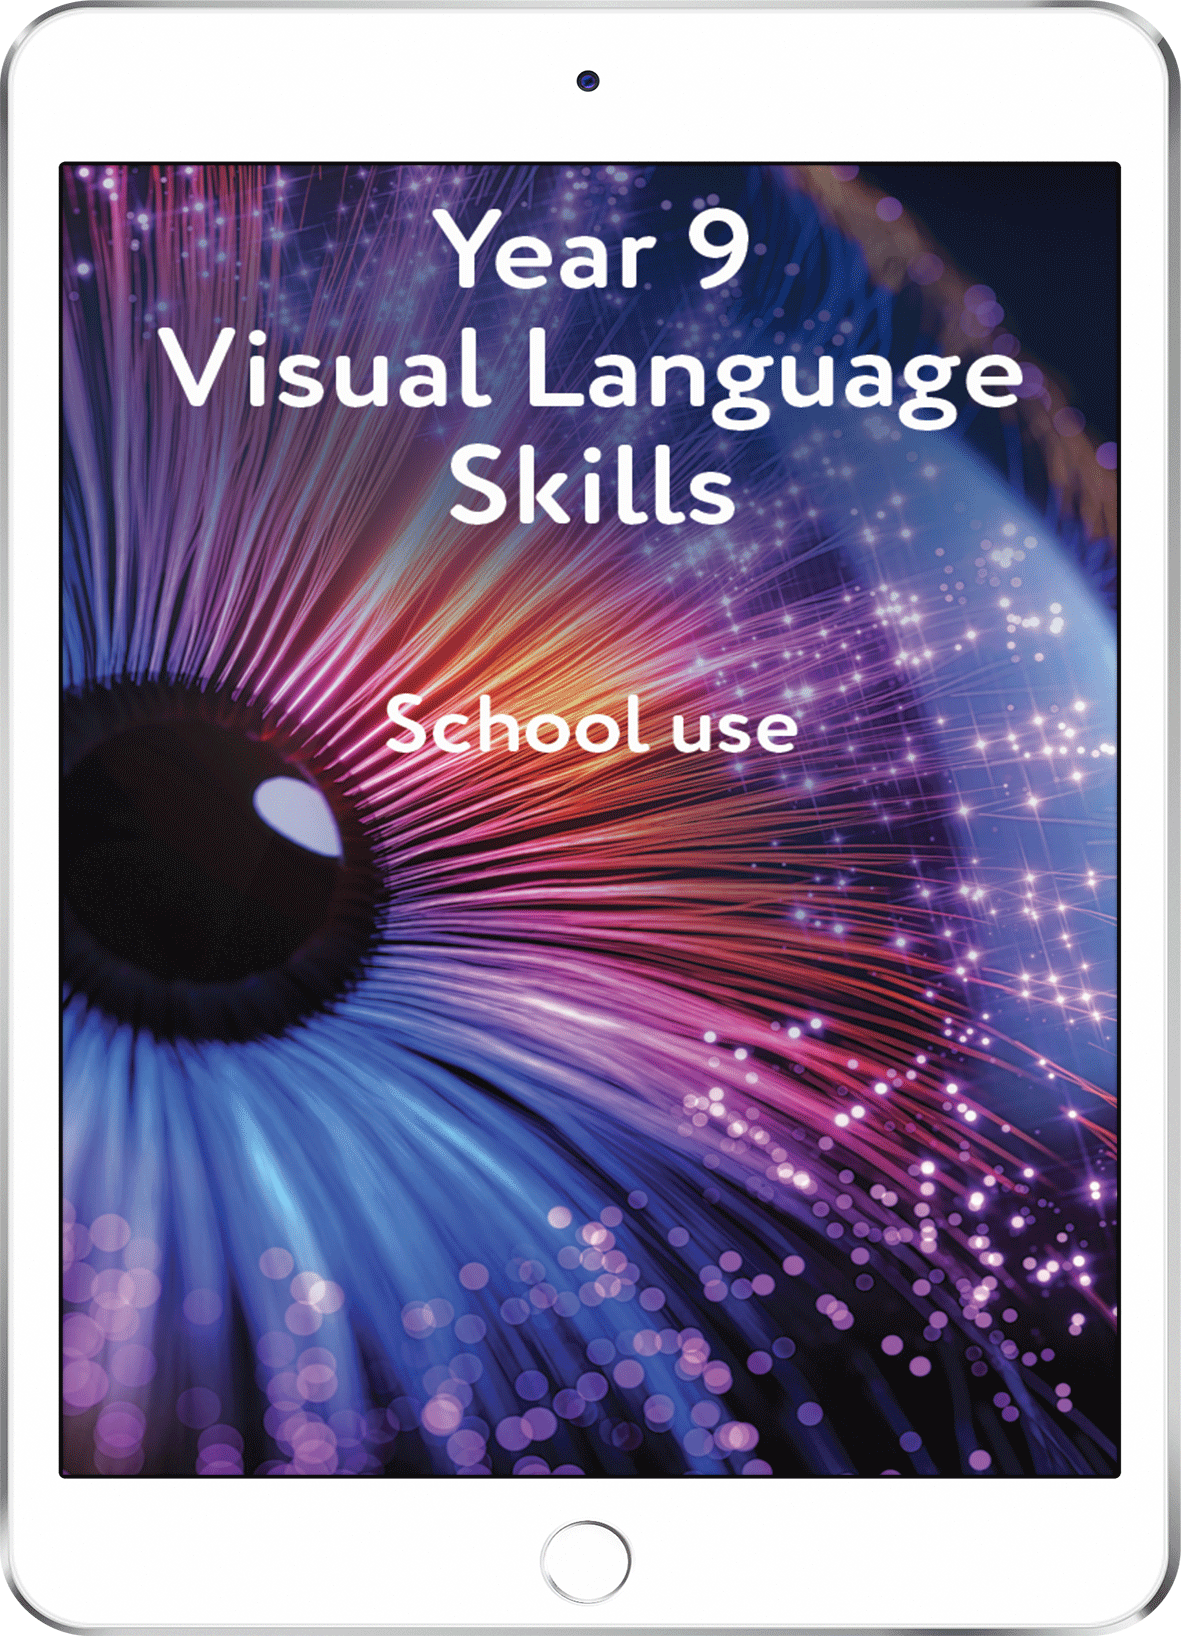 Year 9 Visual Language Skills - School Use